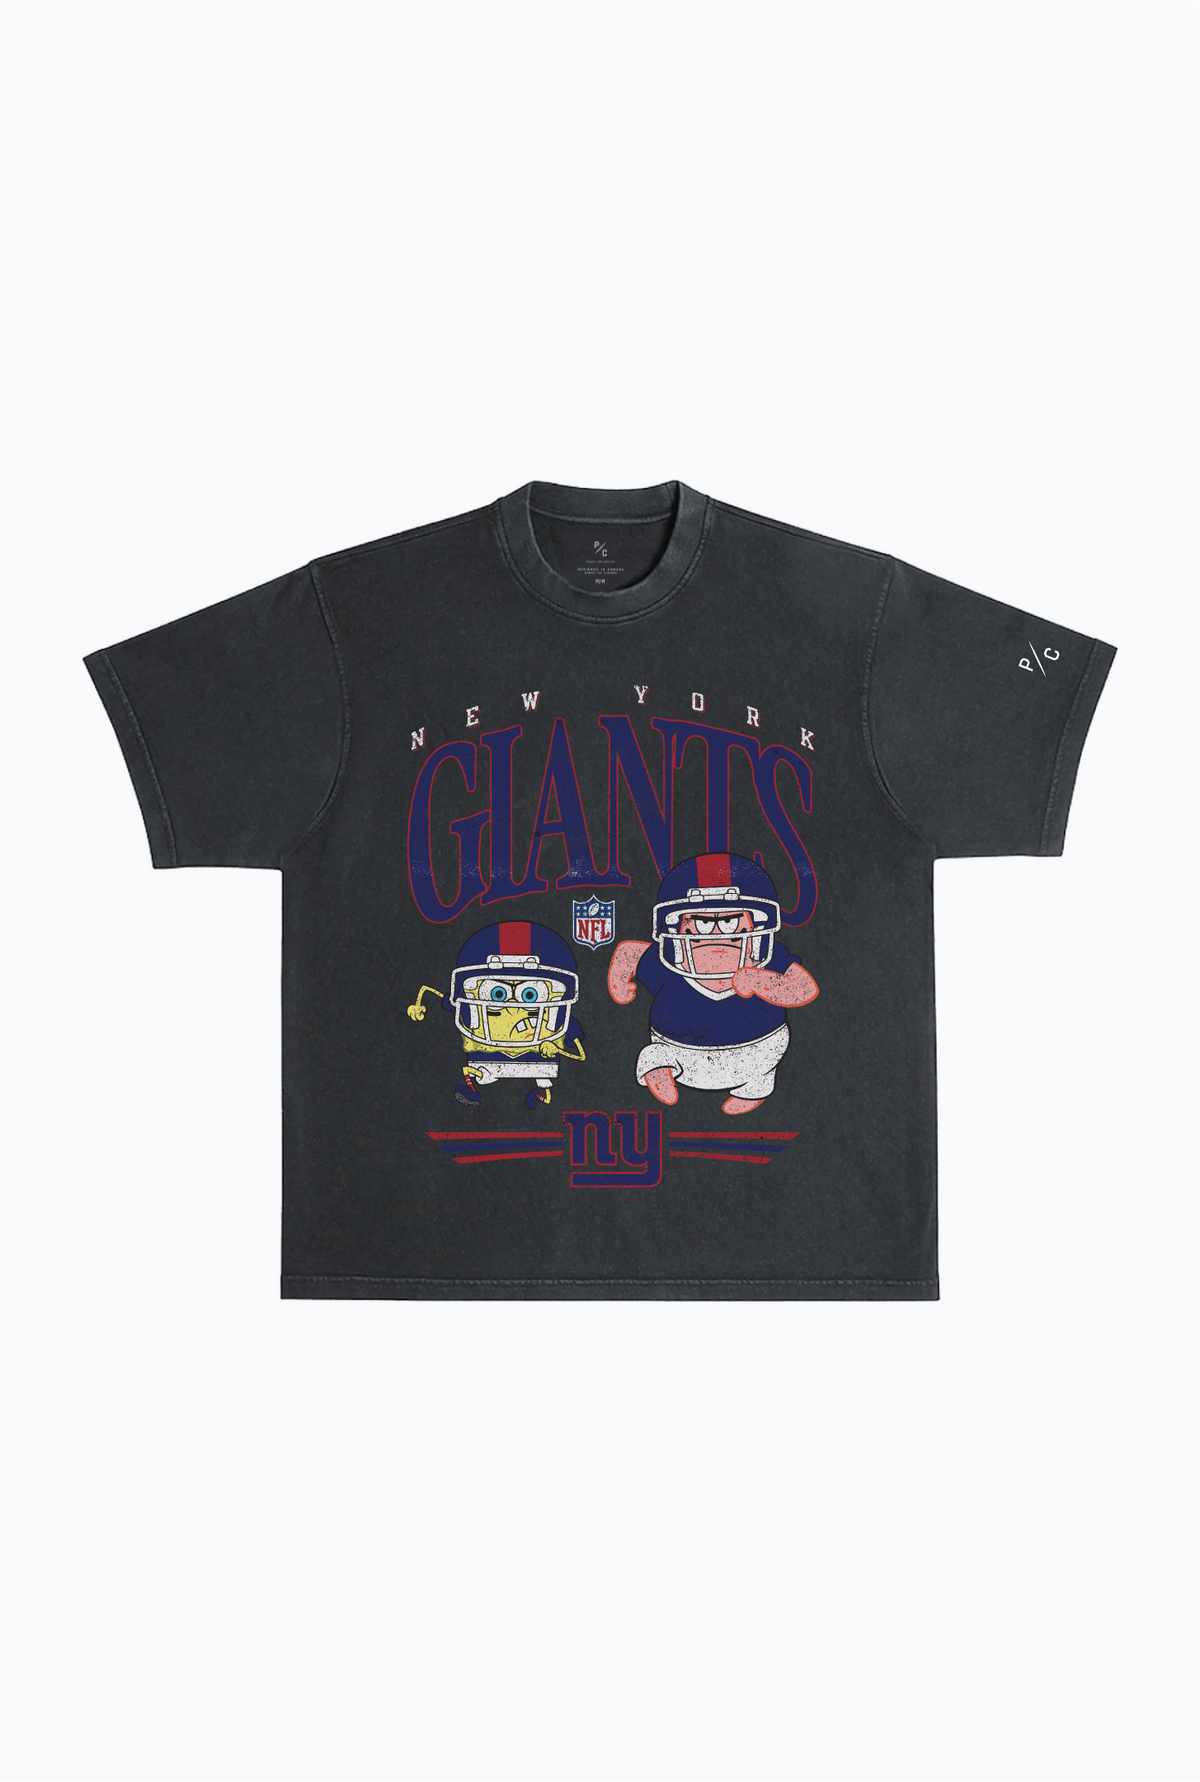 Spongebob & Patrick Rush Heavy Pigment Dye T-Shirt - New York Giants